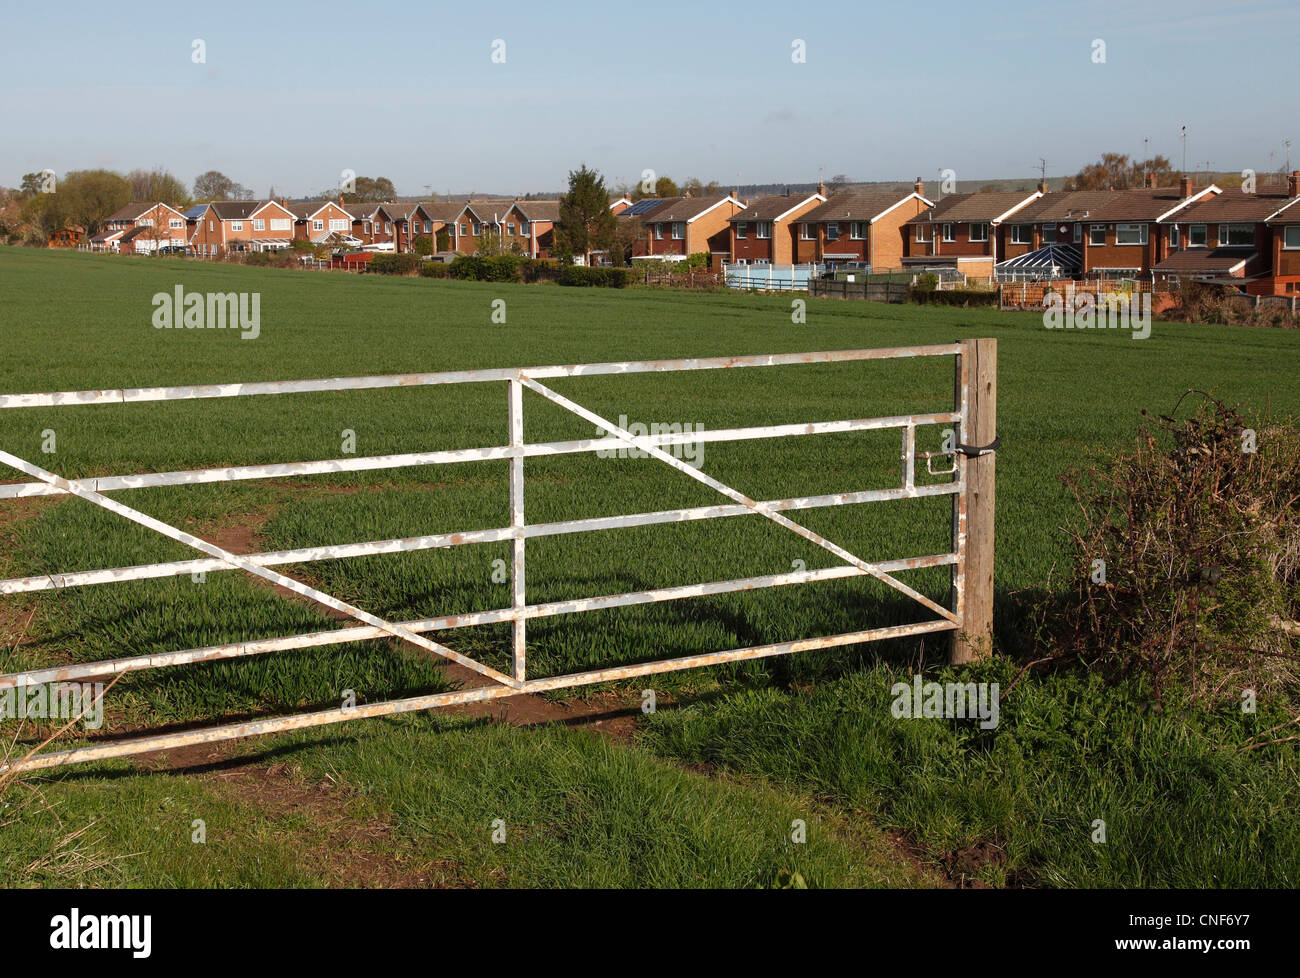 Greenbelt land adjacent to a housing estate in the U.K. Stock Photo